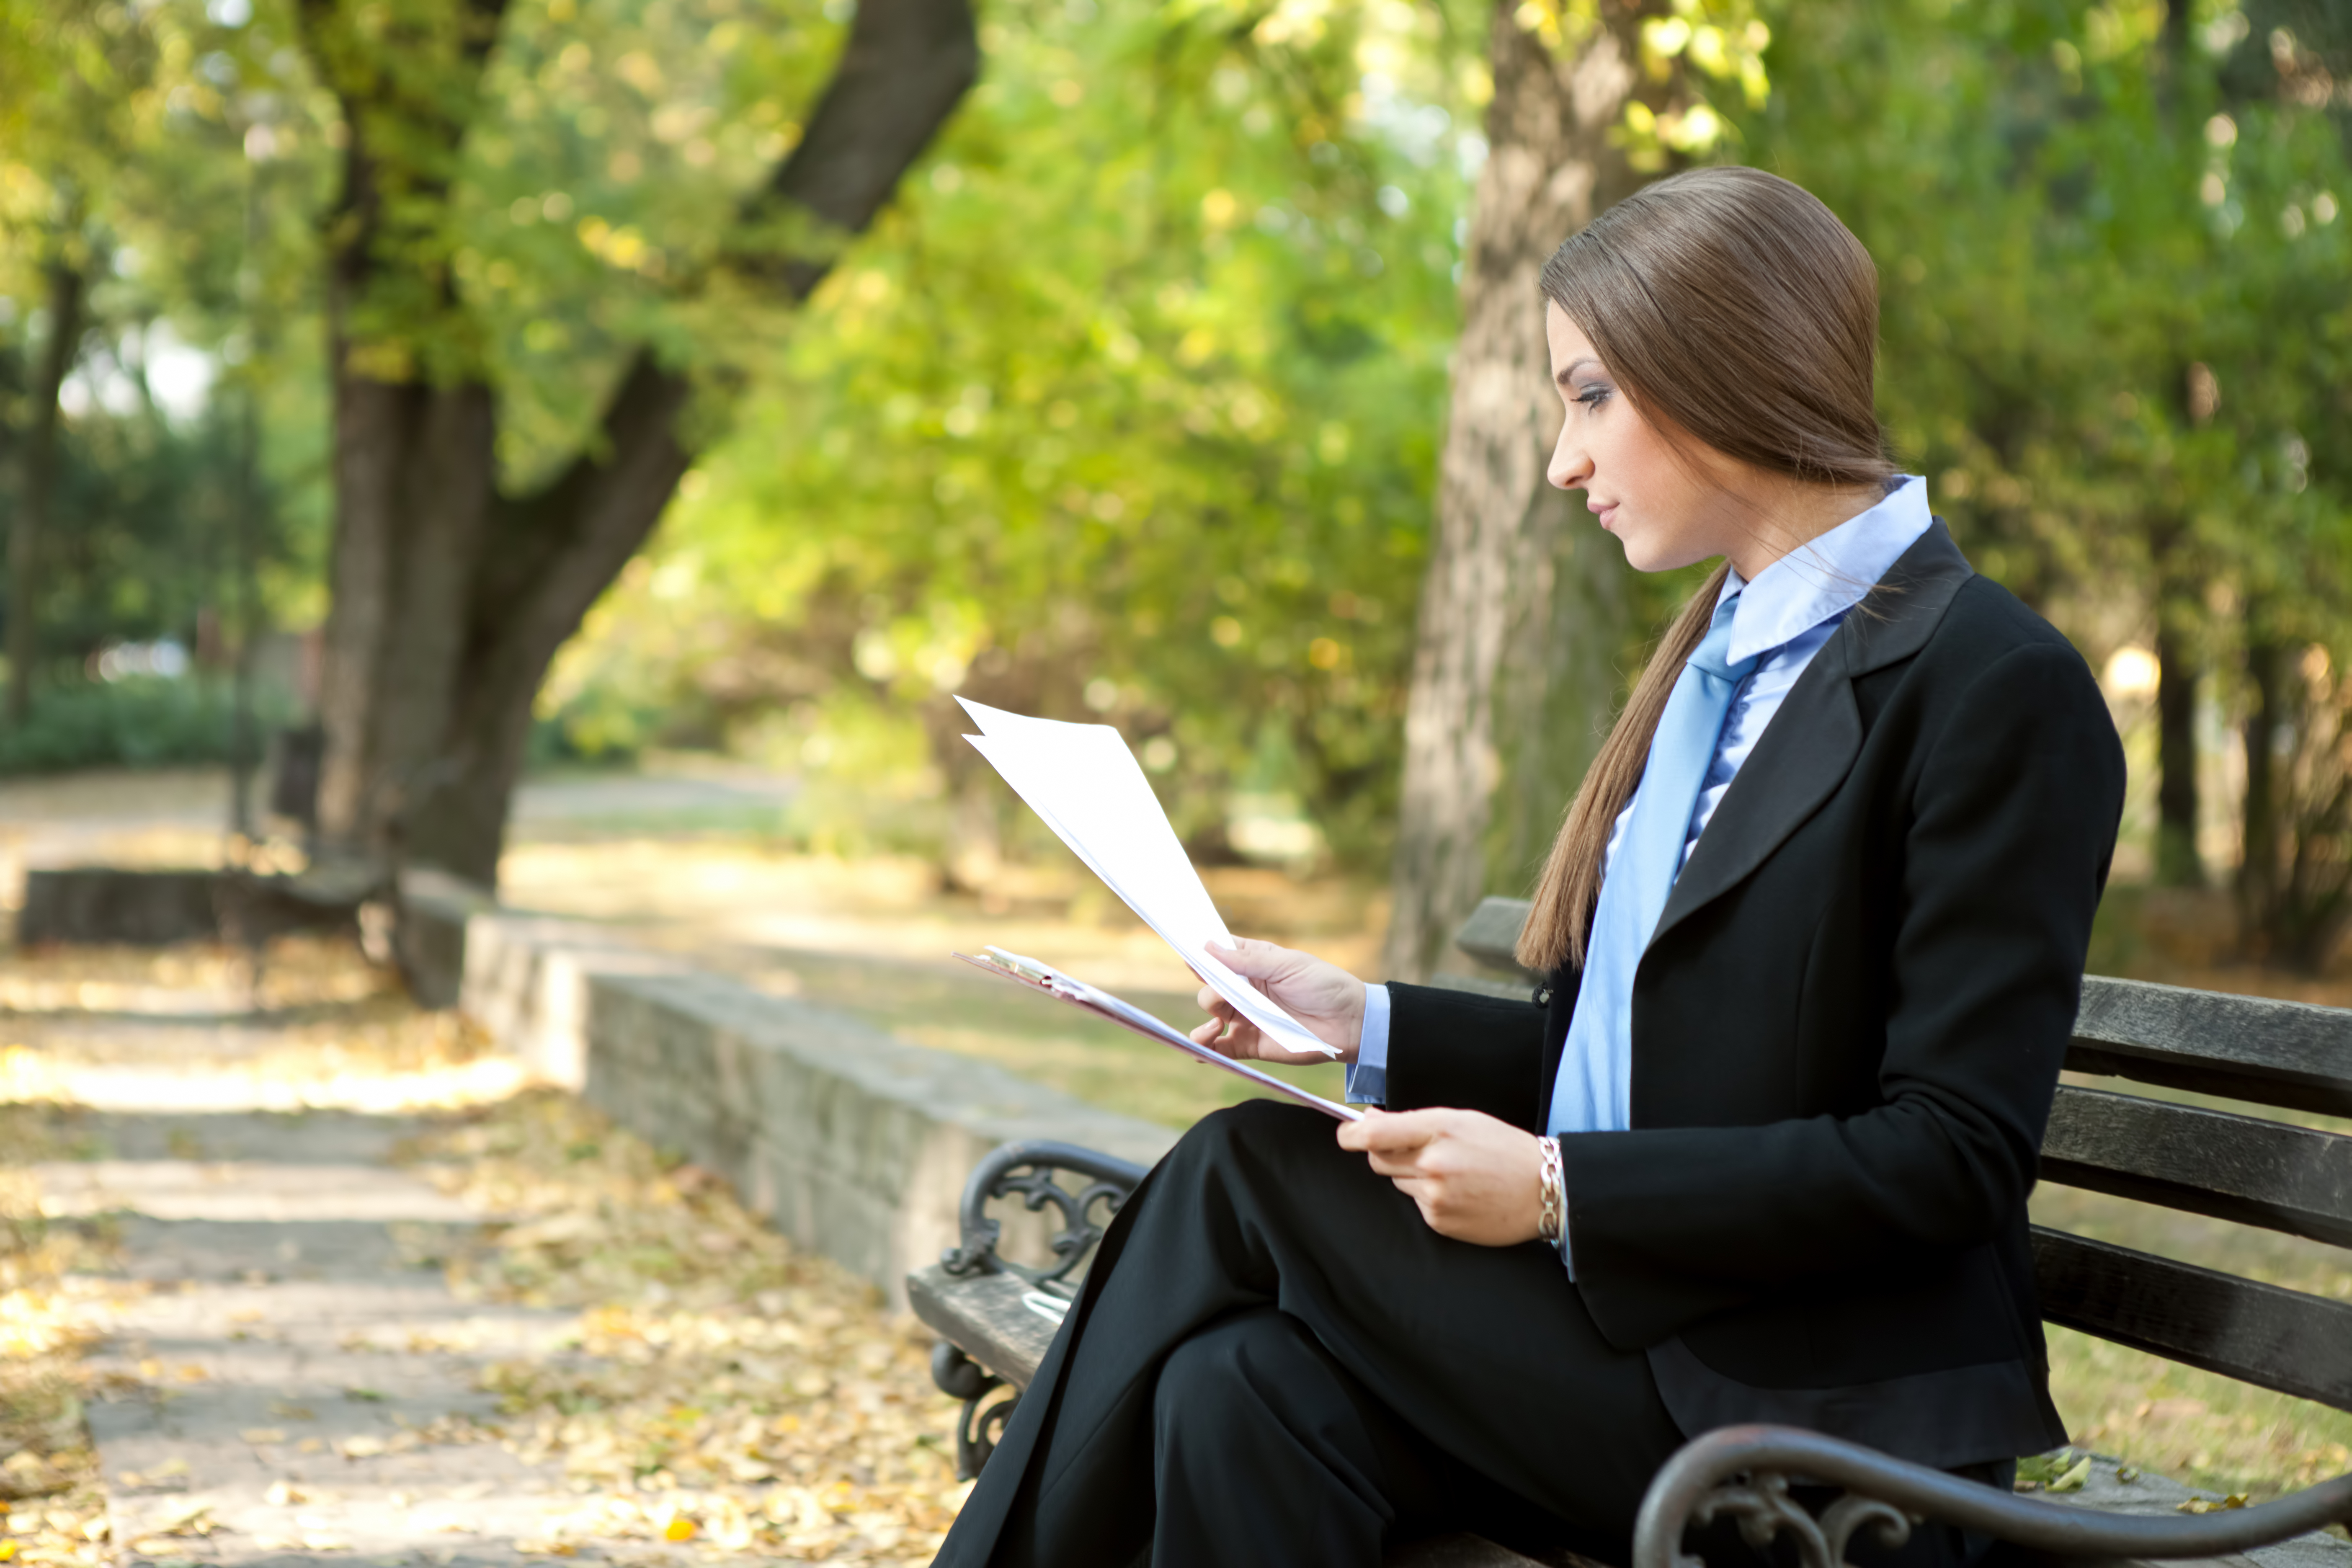 Femme lisant une lettre | Source : Shutterstock